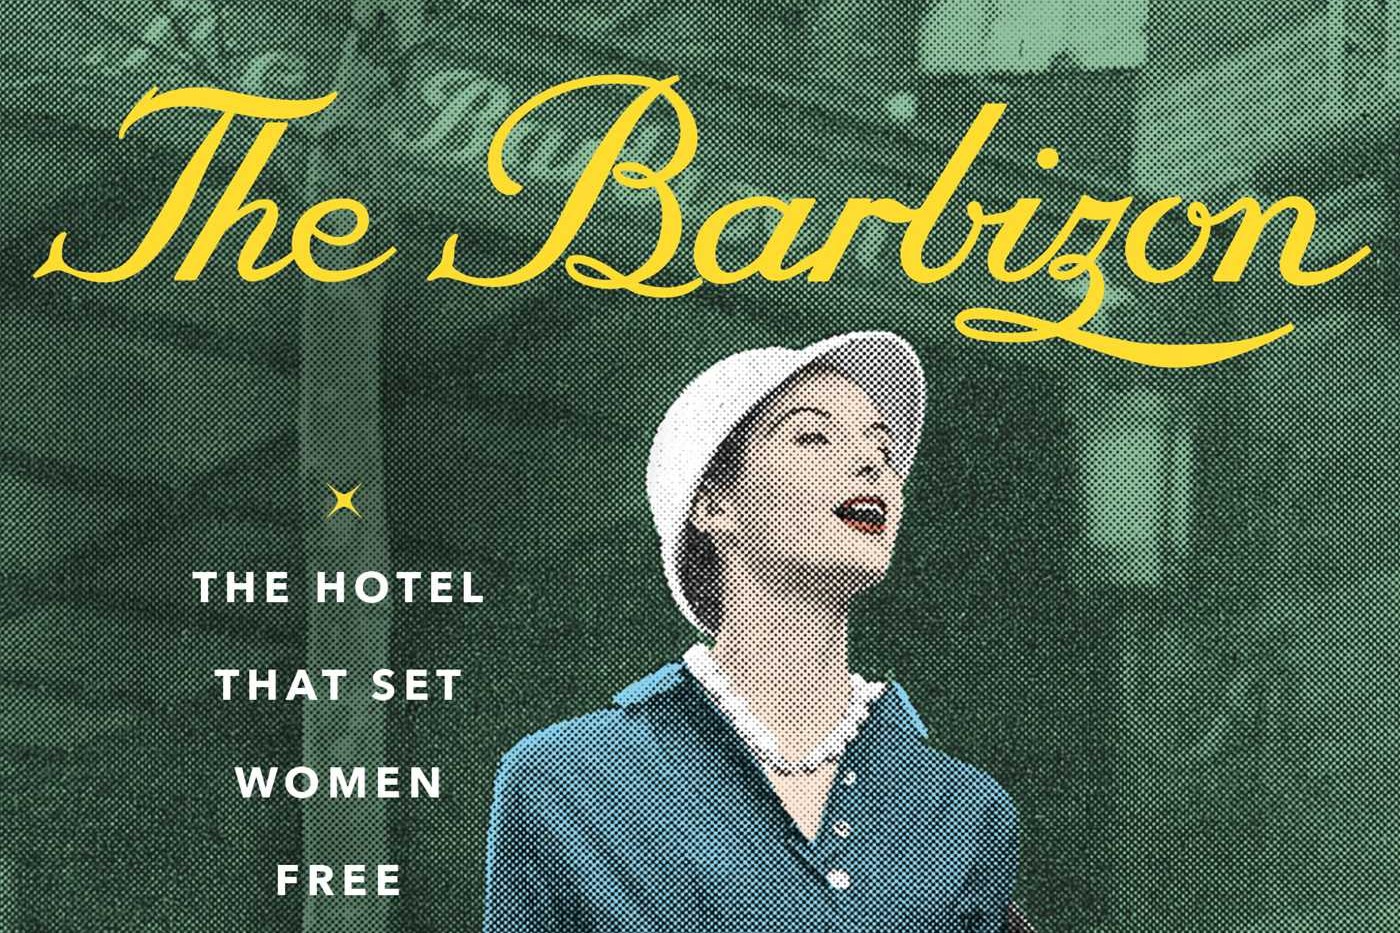 The Barbizon; The Hotel That Set Women Free by Paulina Bren Reviewed by Connie Nordhielm Wooldridge